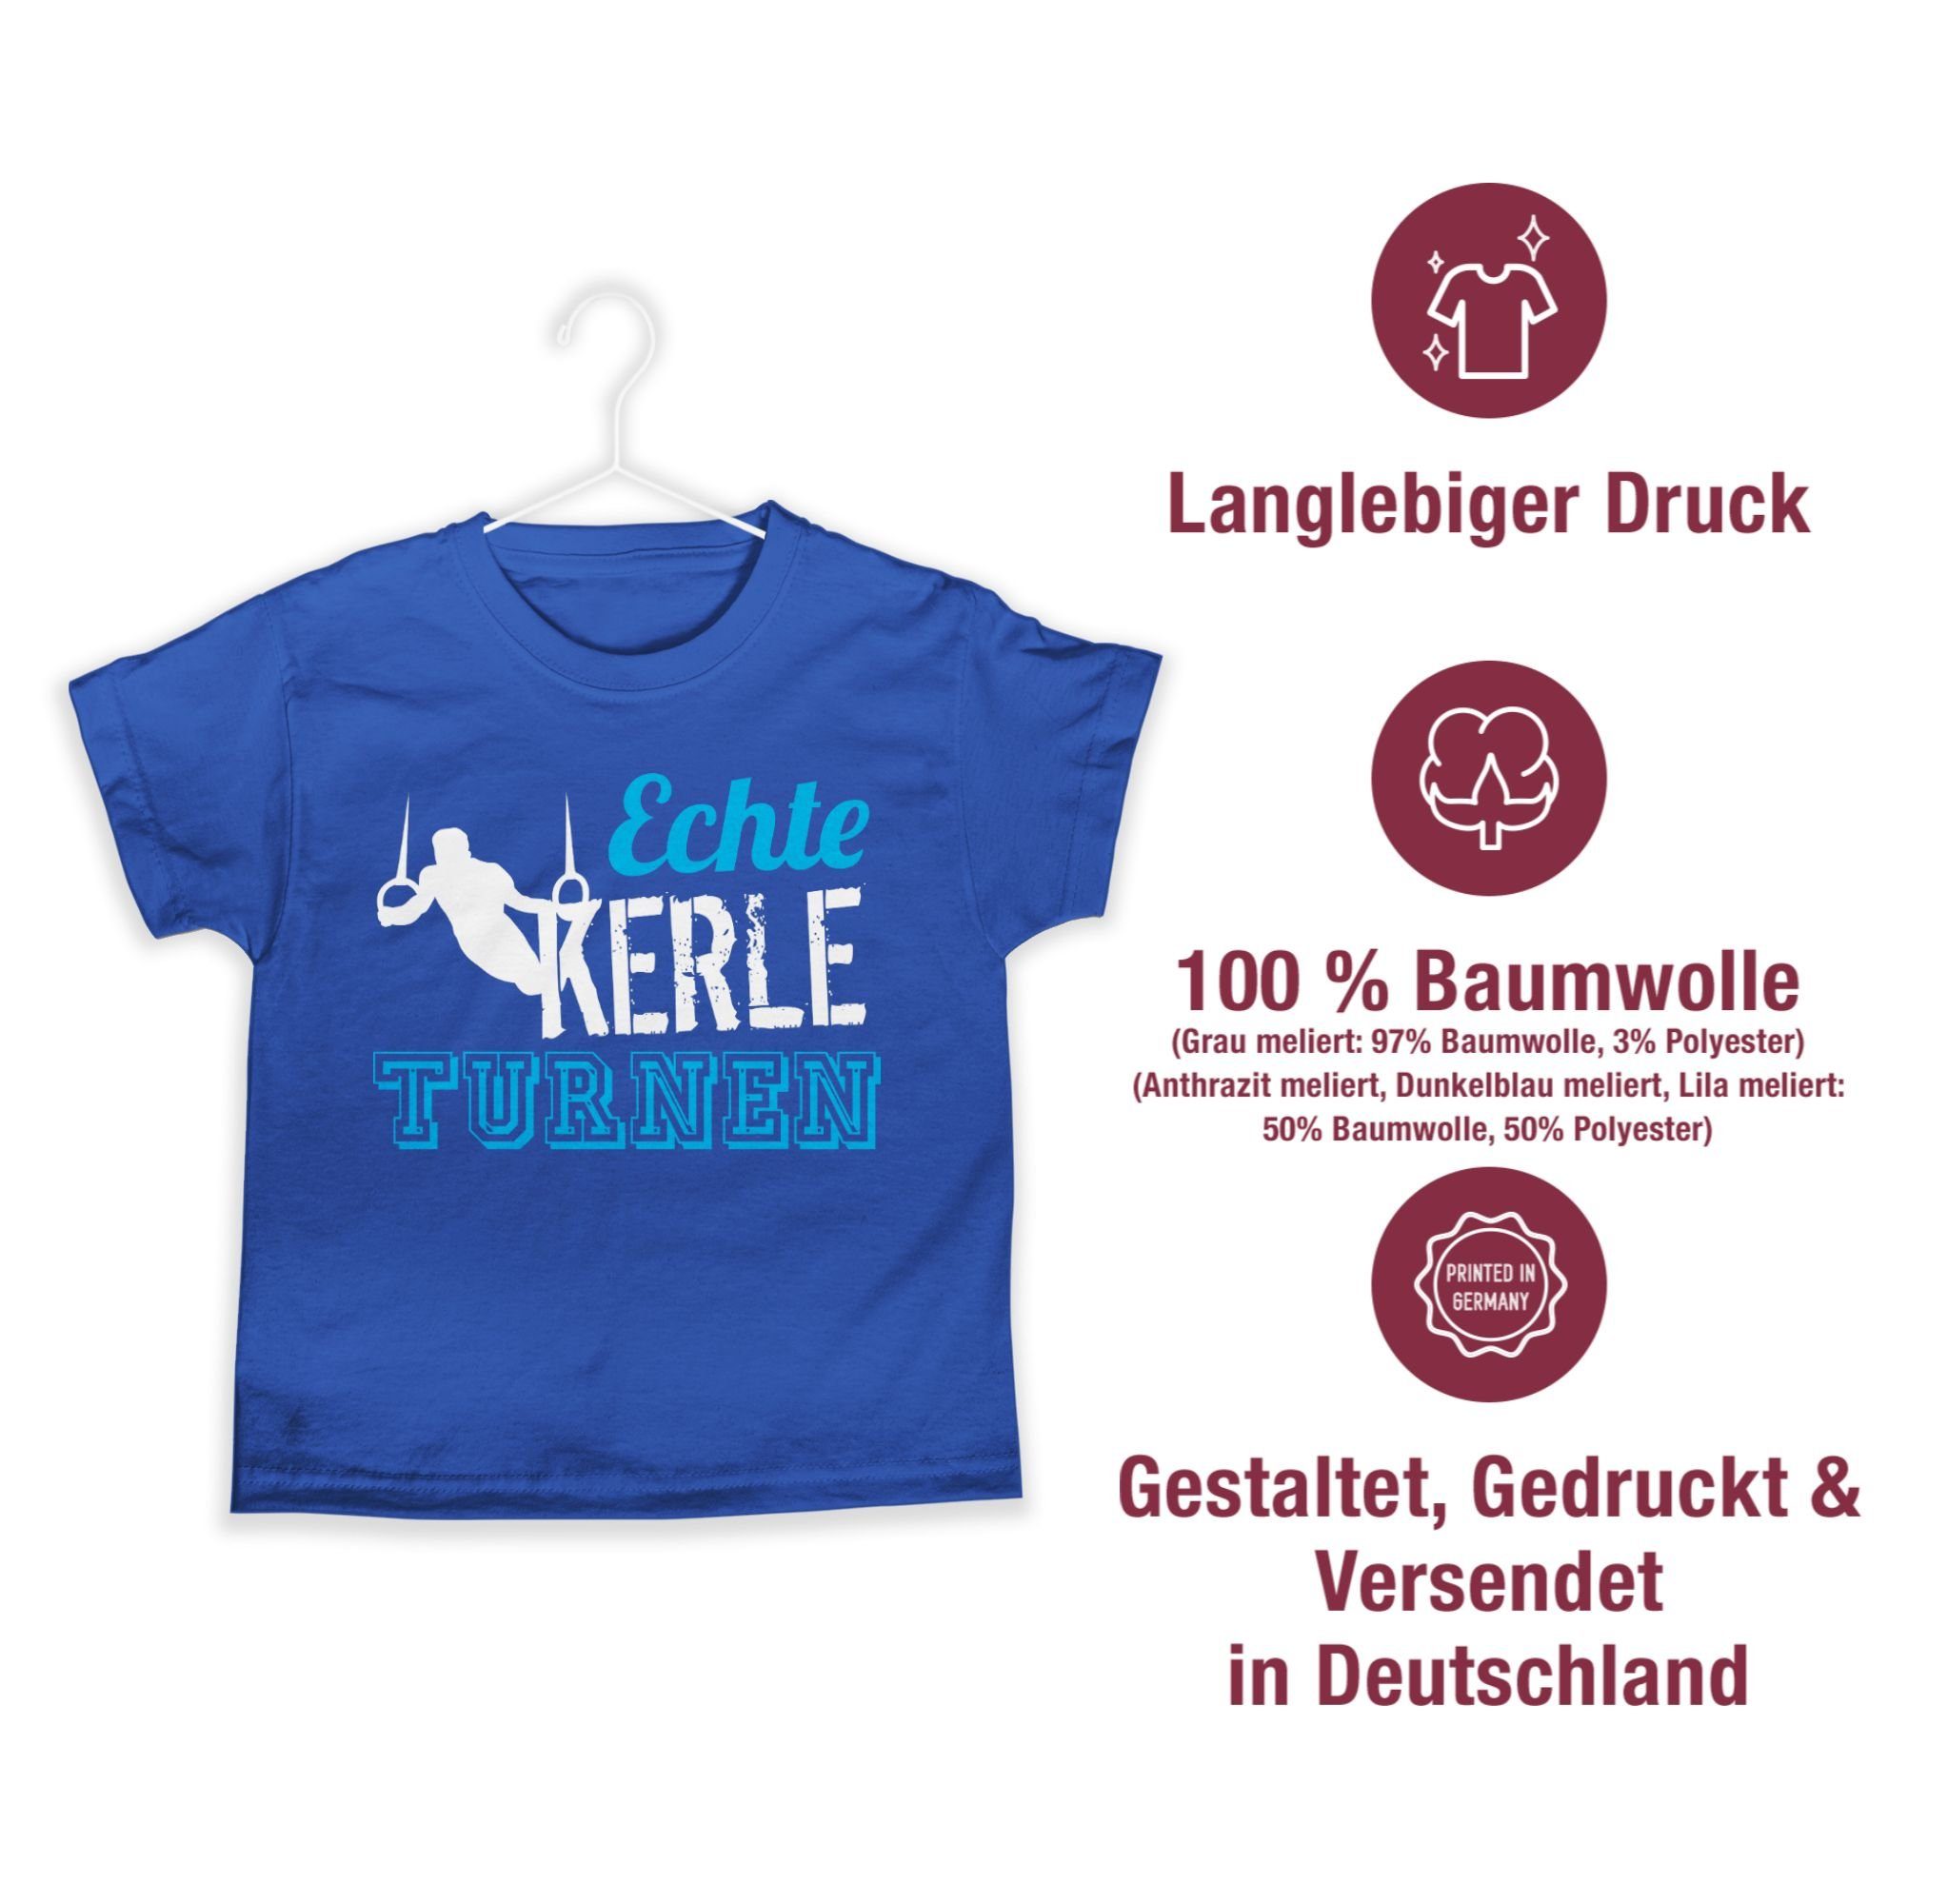 Sport Shirtracer T-Shirt turnen Kleidung Kinder Echte Kerle Royalblau 2